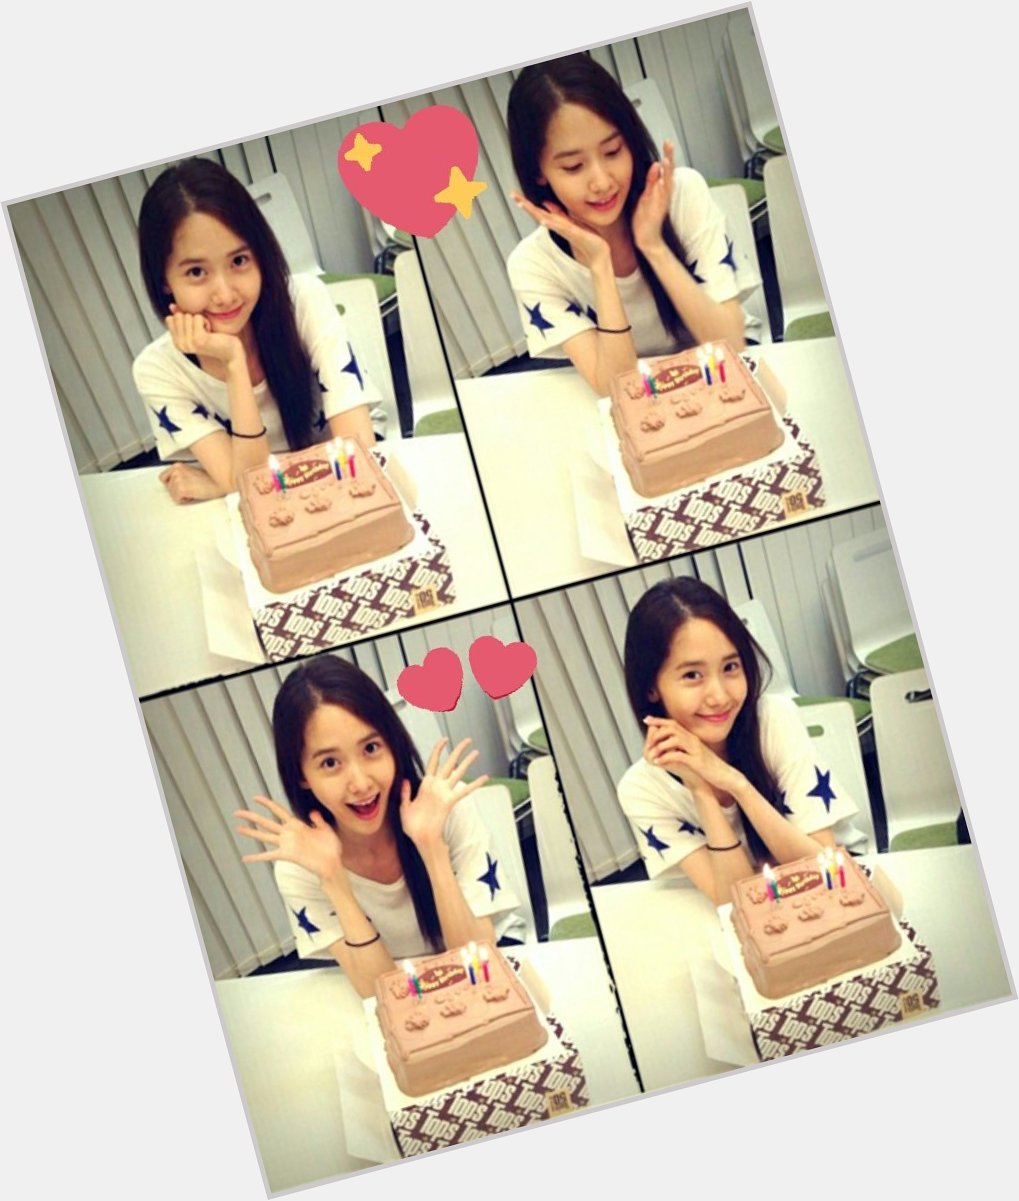 Happy birthday Im Yoona
<3 always beautiful and cute 